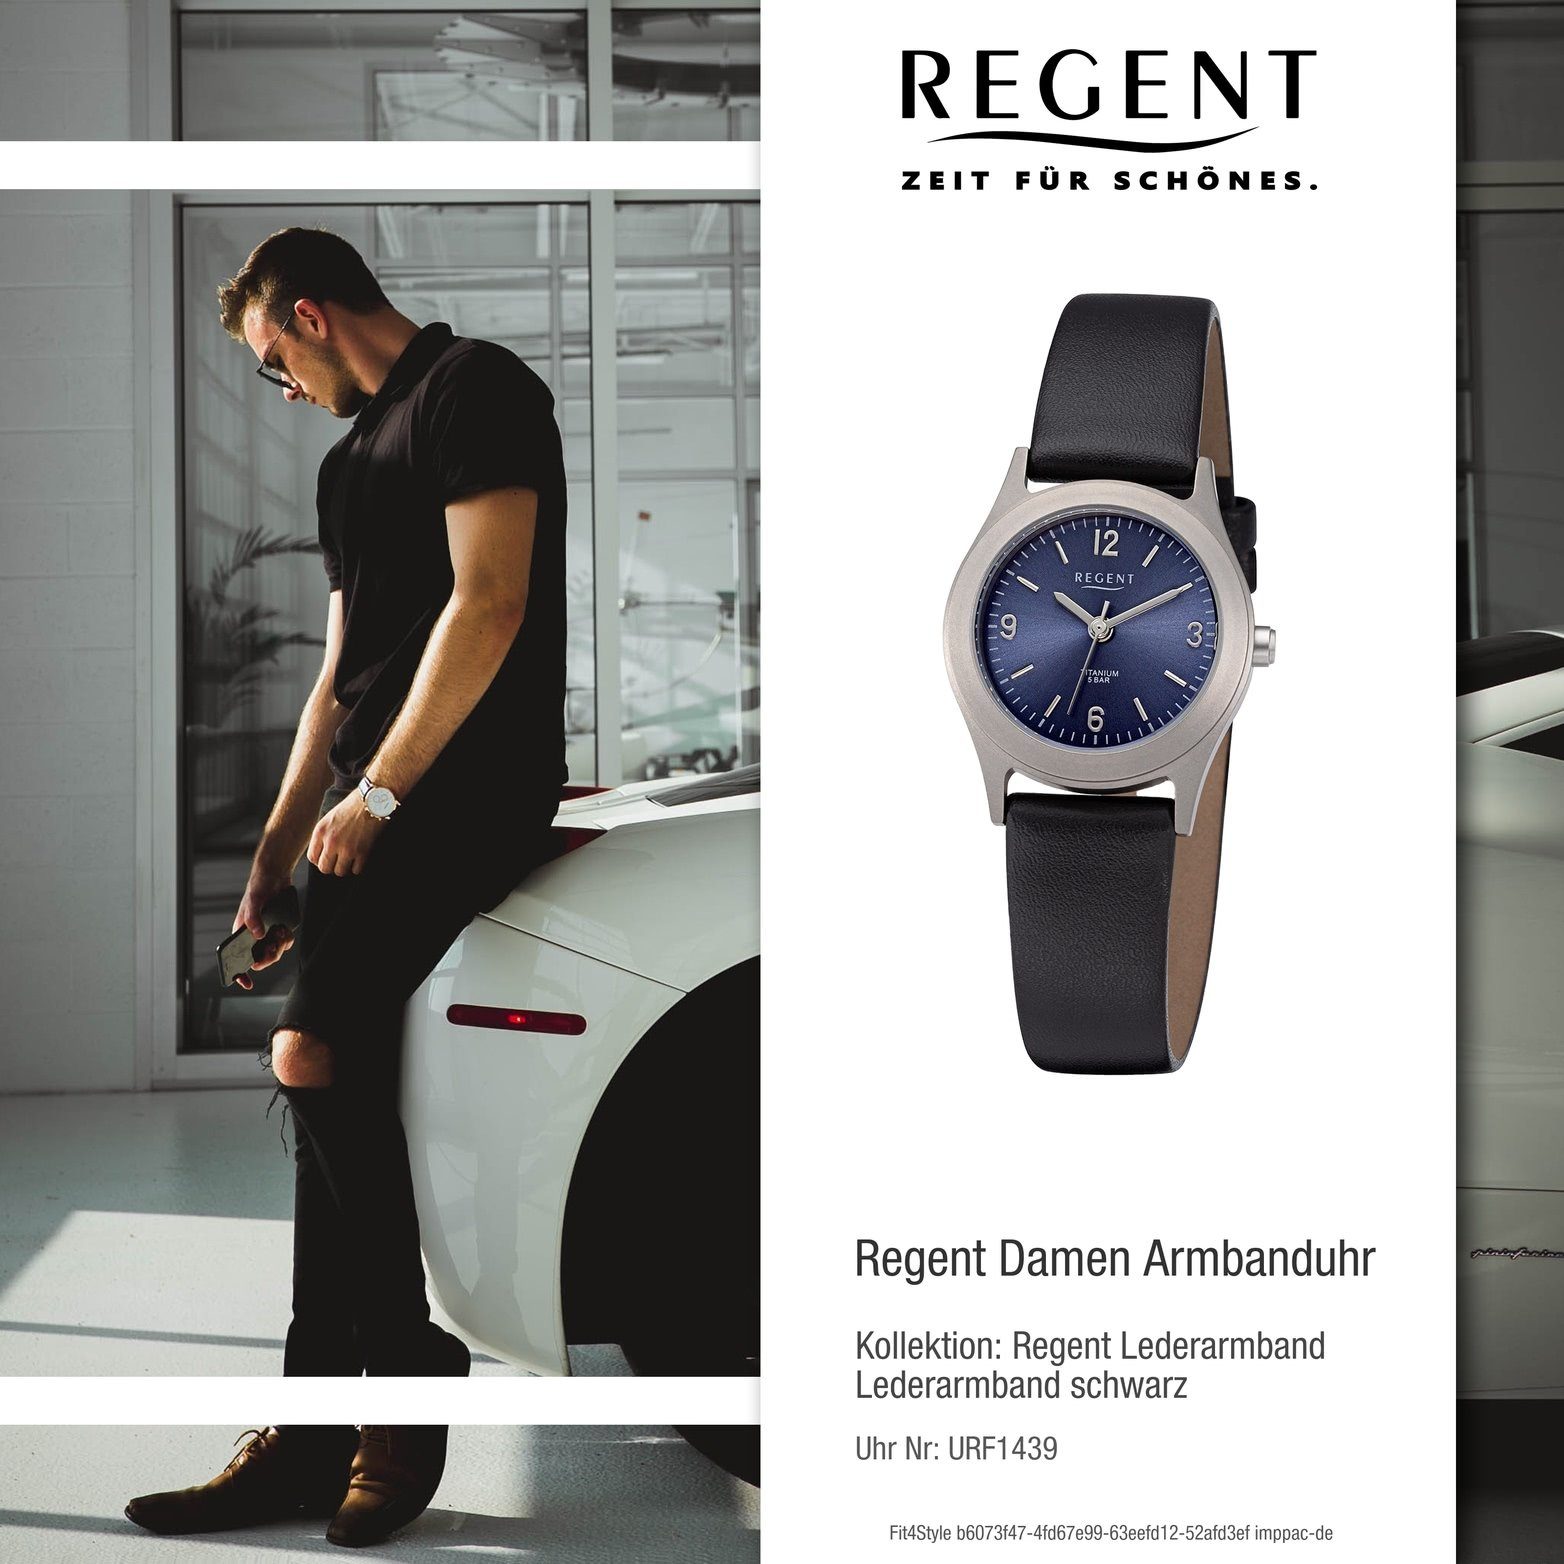 Regent schwarz, Analog, groß (ca. Regent Quarzuhr Lederarmband Damen Damenuhr Armbanduhr 26mm) rundes Gehäuse, extra